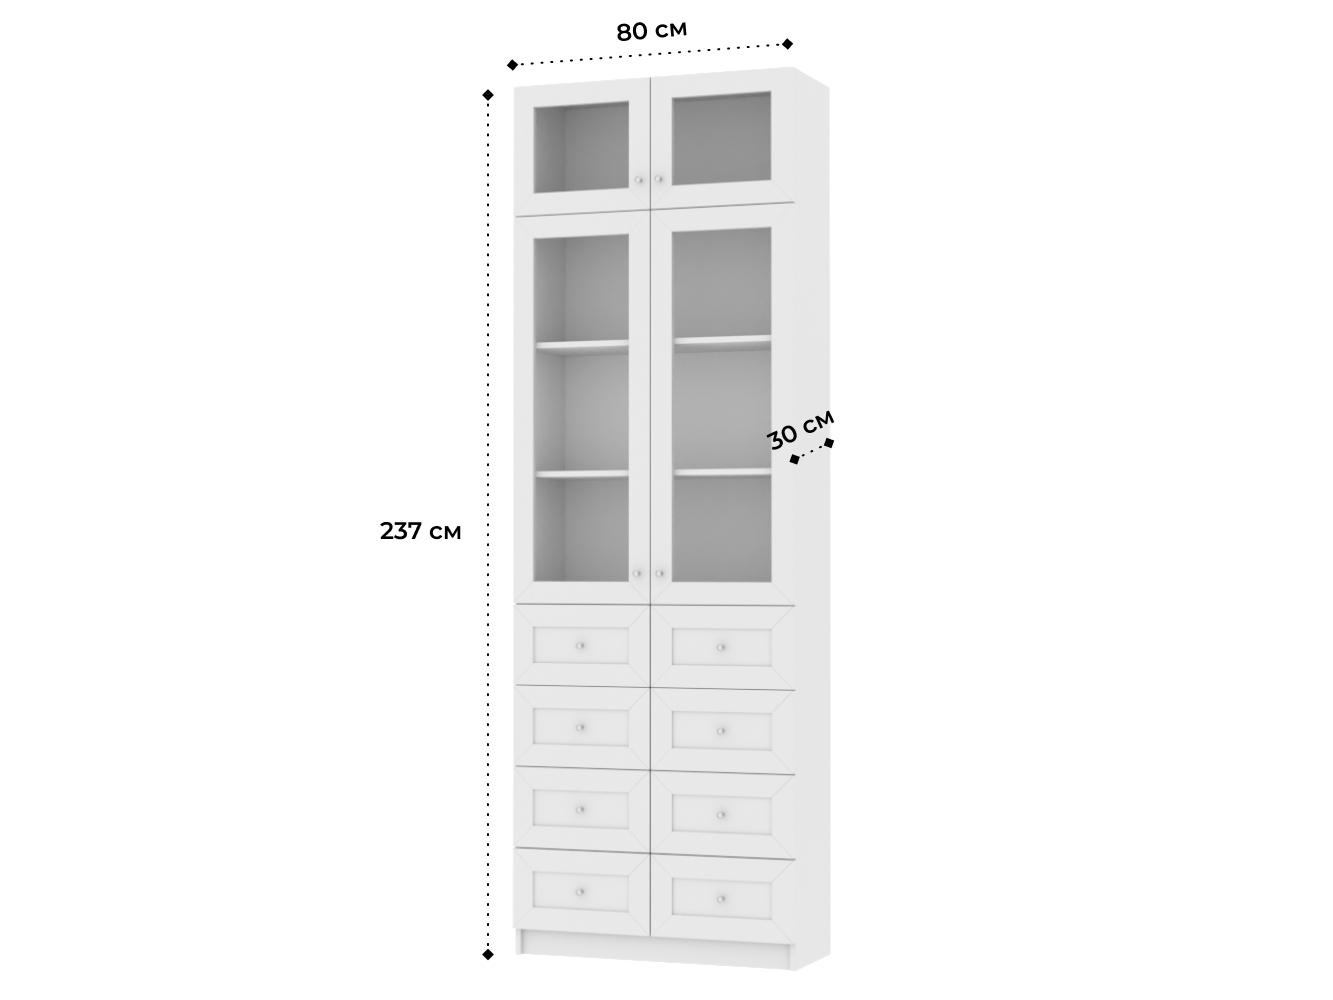 Книжный шкаф Билли 320 white ИКЕА (IKEA) изображение товара